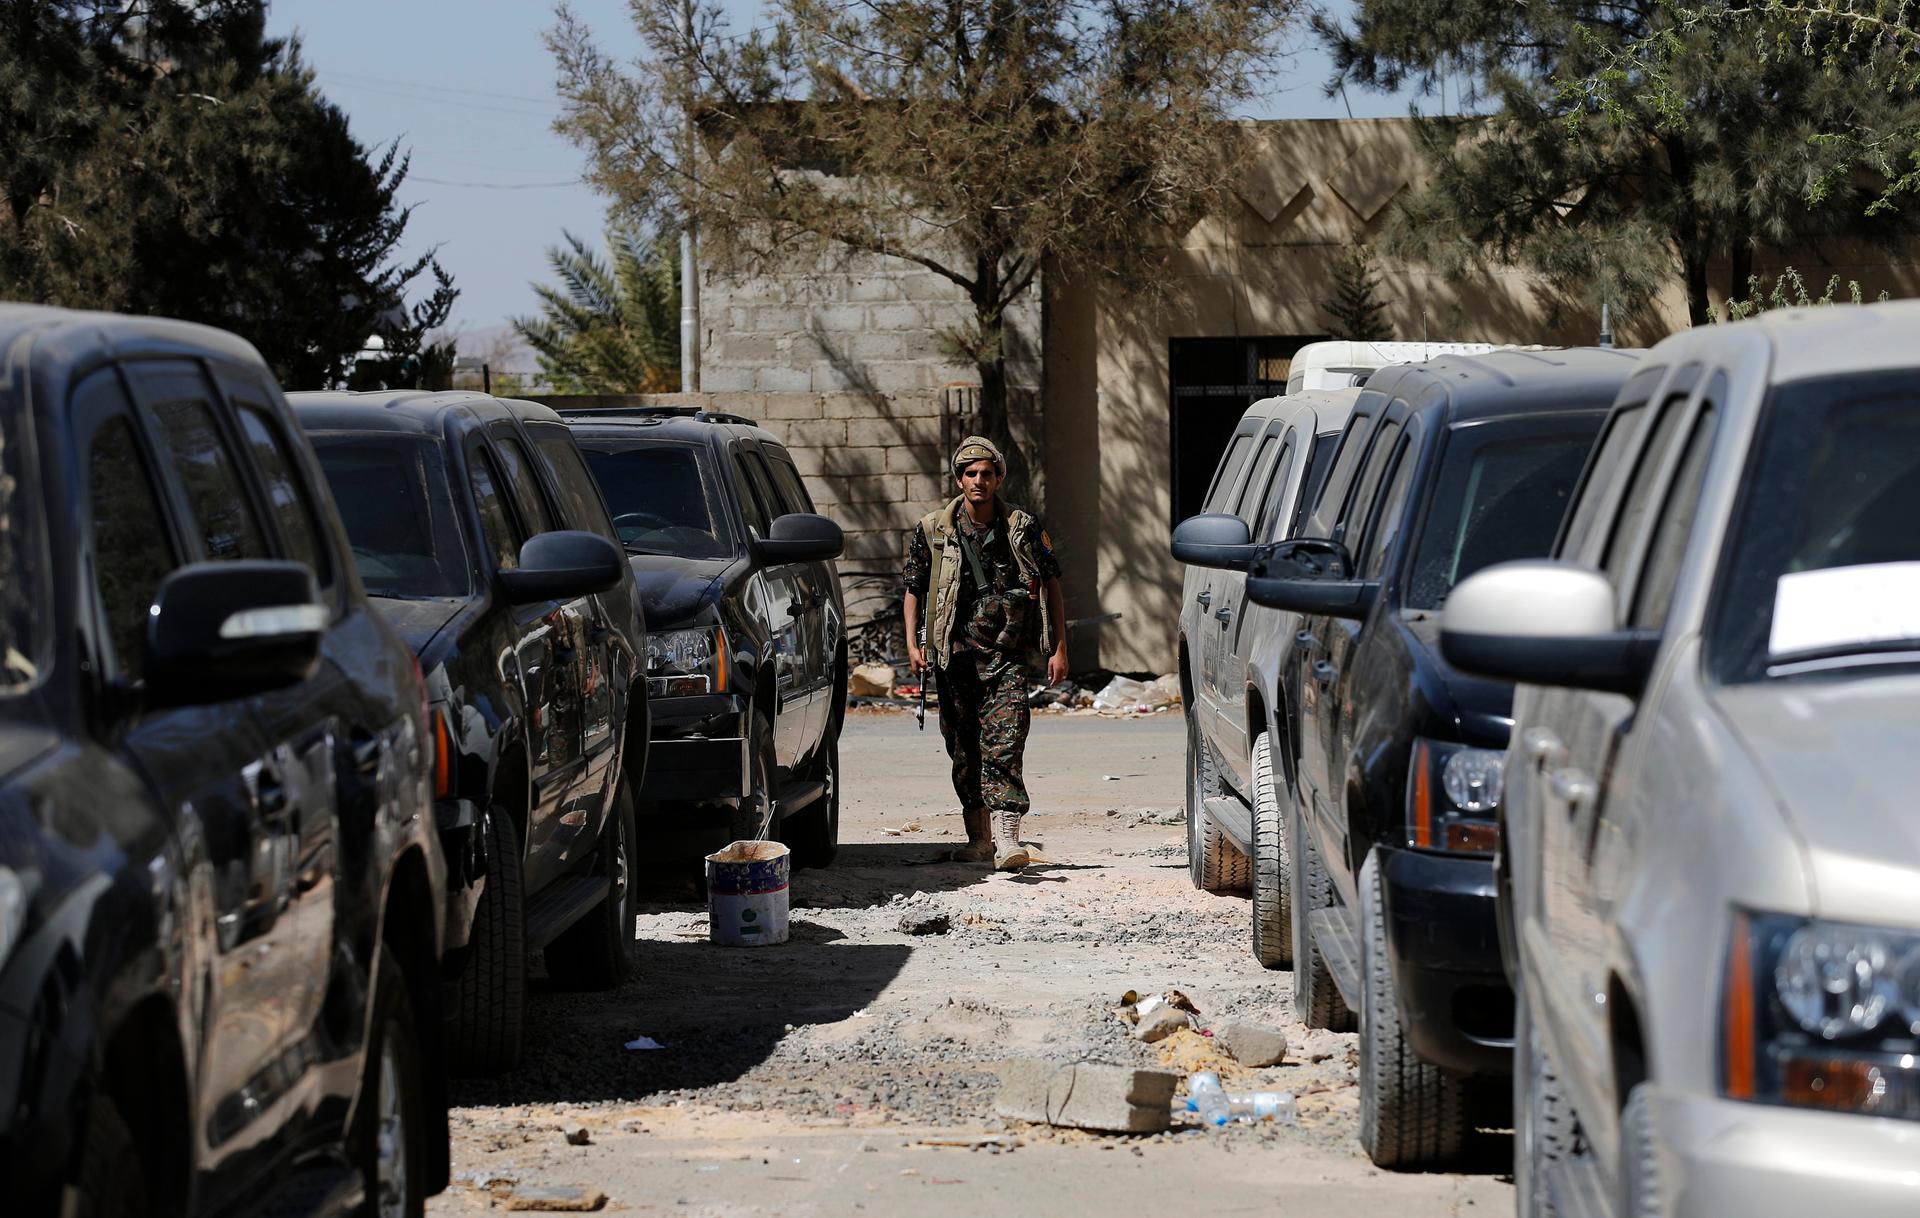 US armored vehicles left behind in Yemen